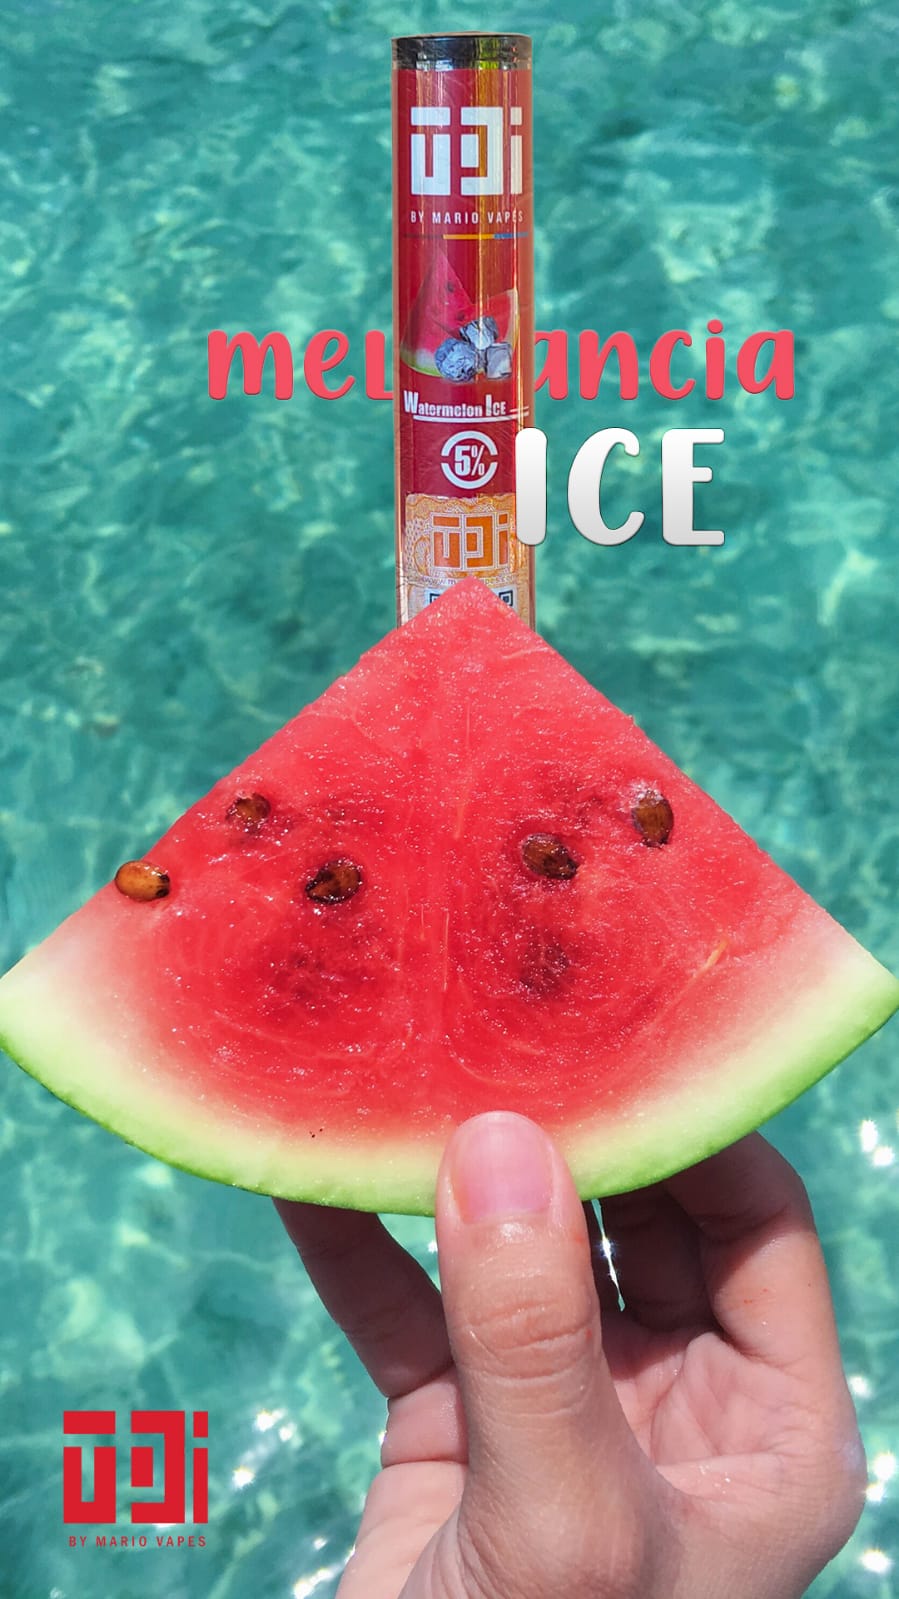 UDI Watermelon Ice